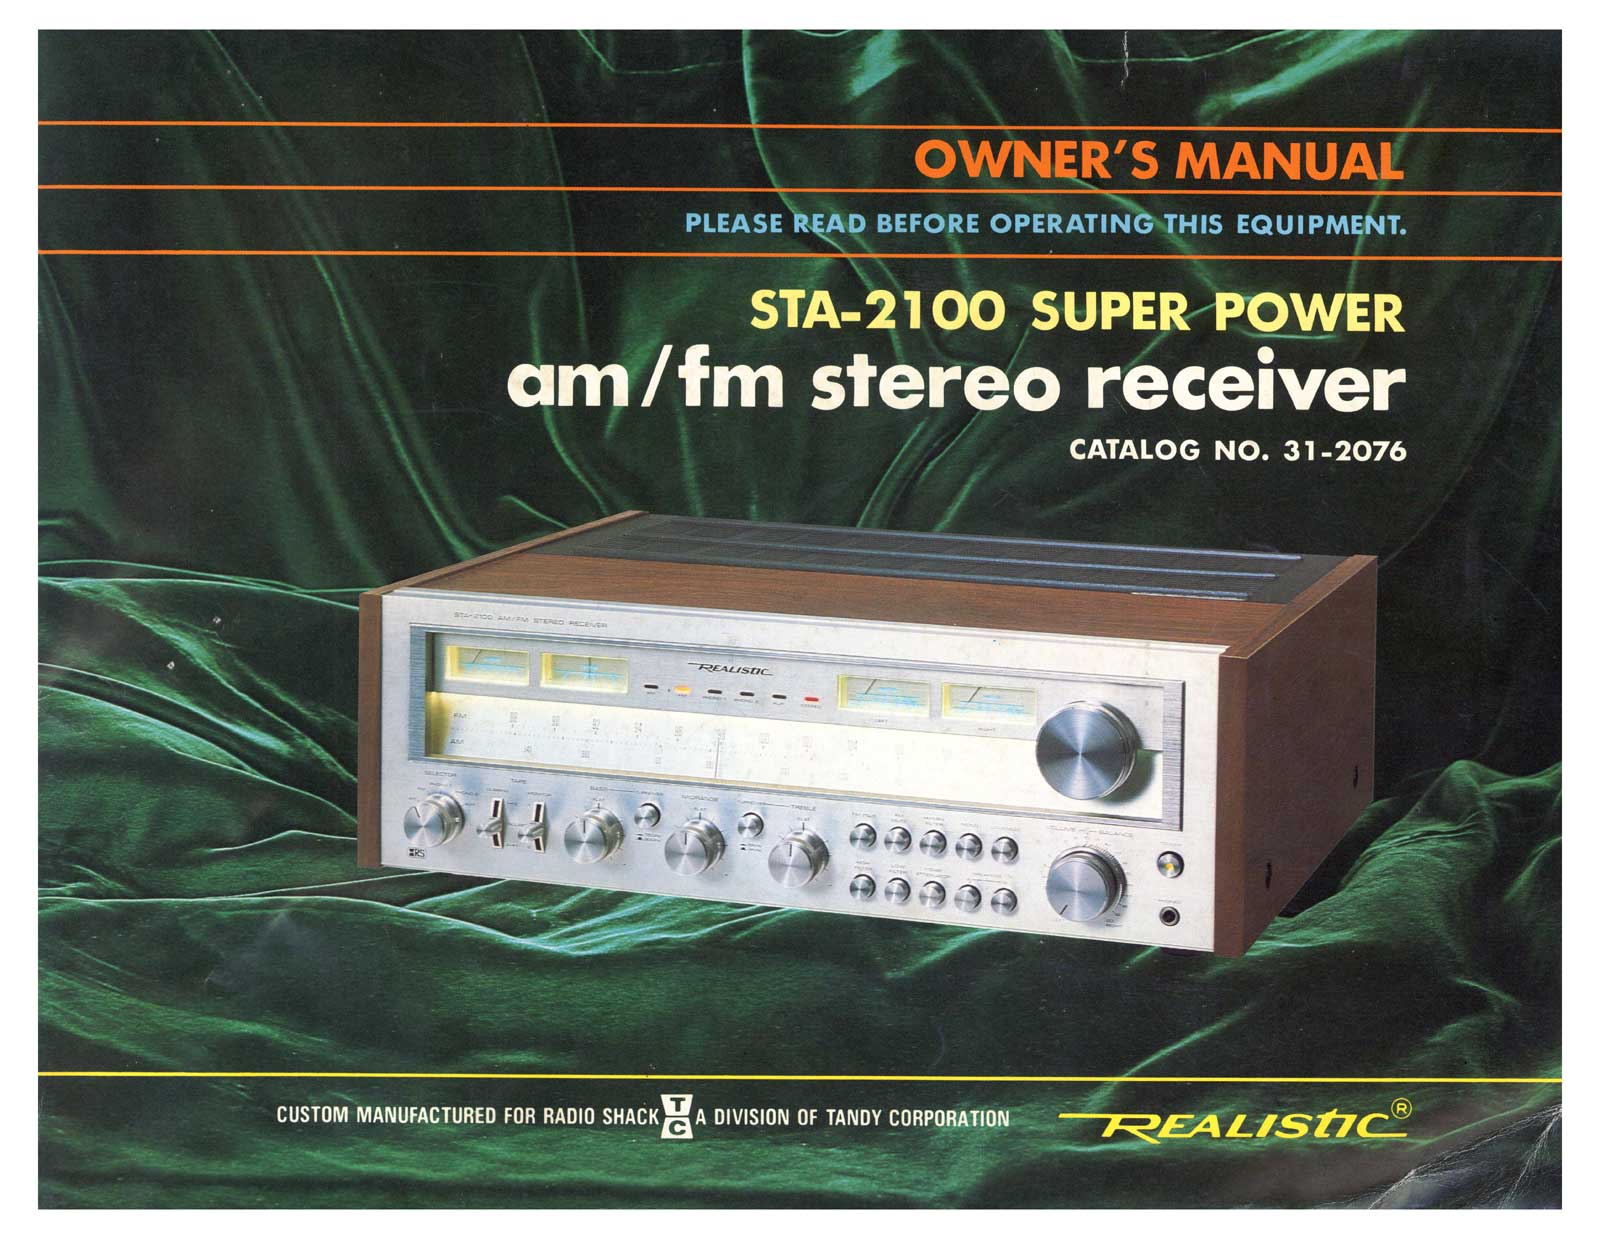 Realistic   RadioShack STA-2100 Owners Manual